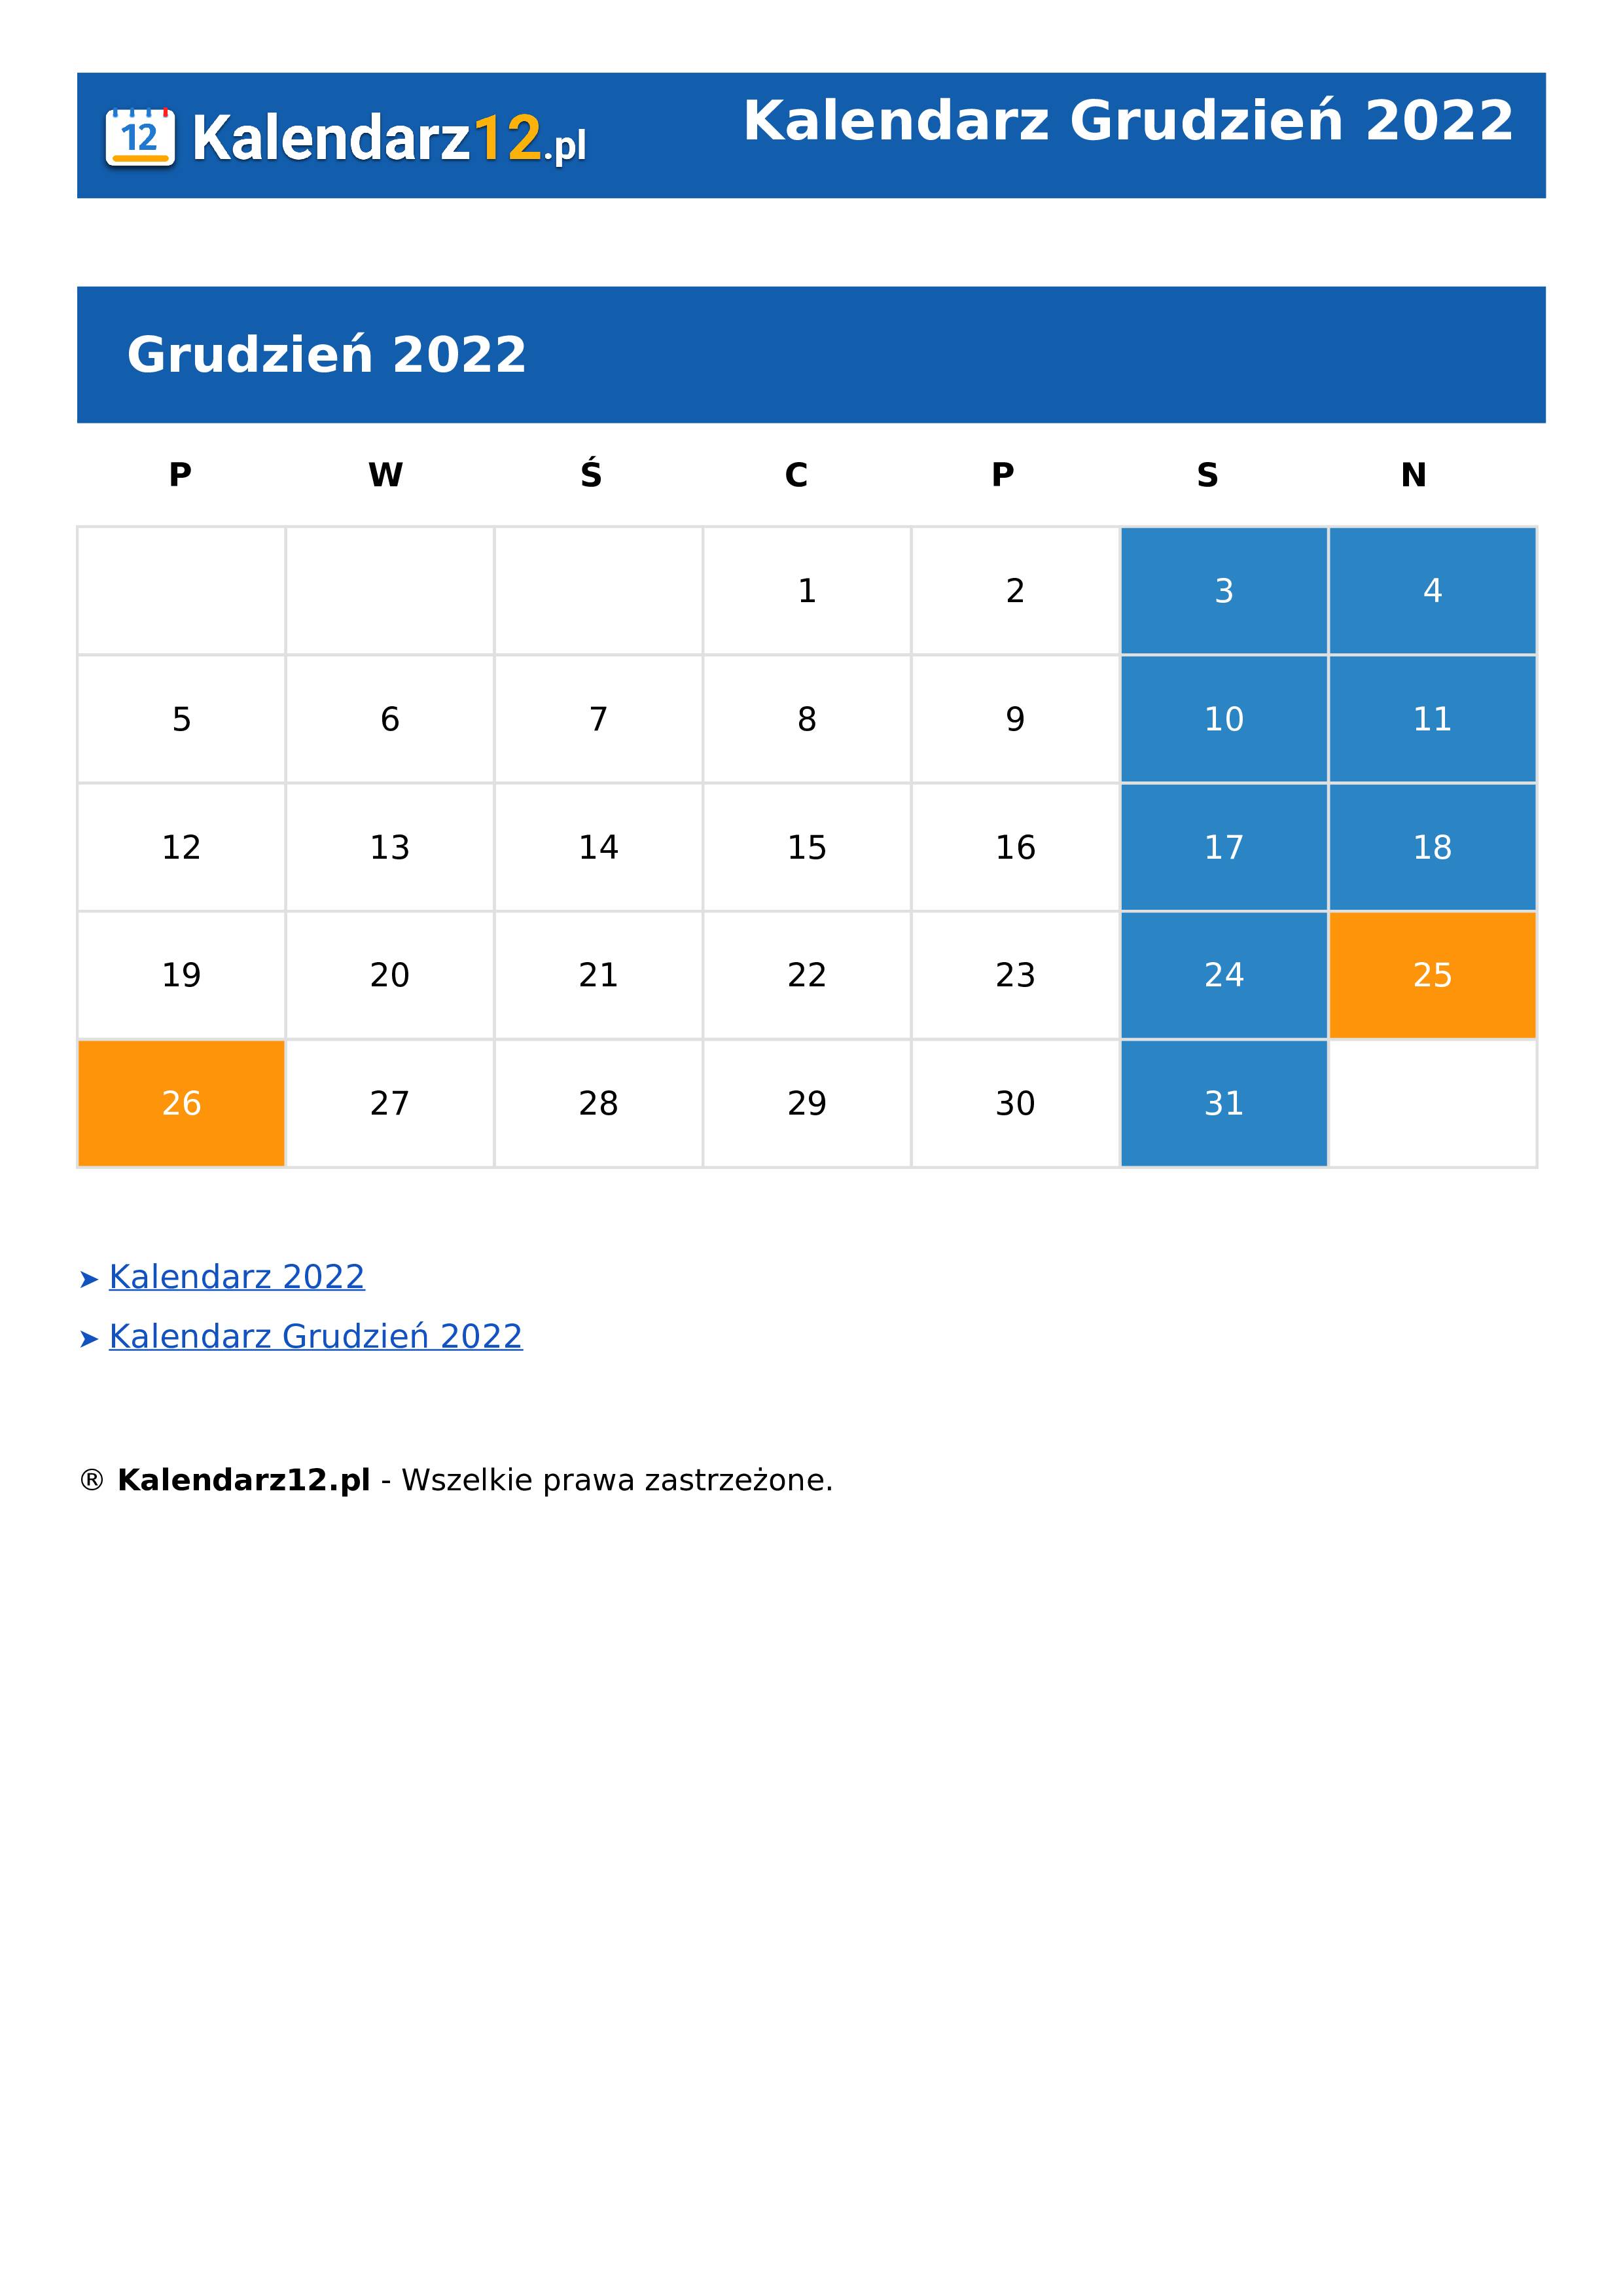 Calendar Grudzień 2022